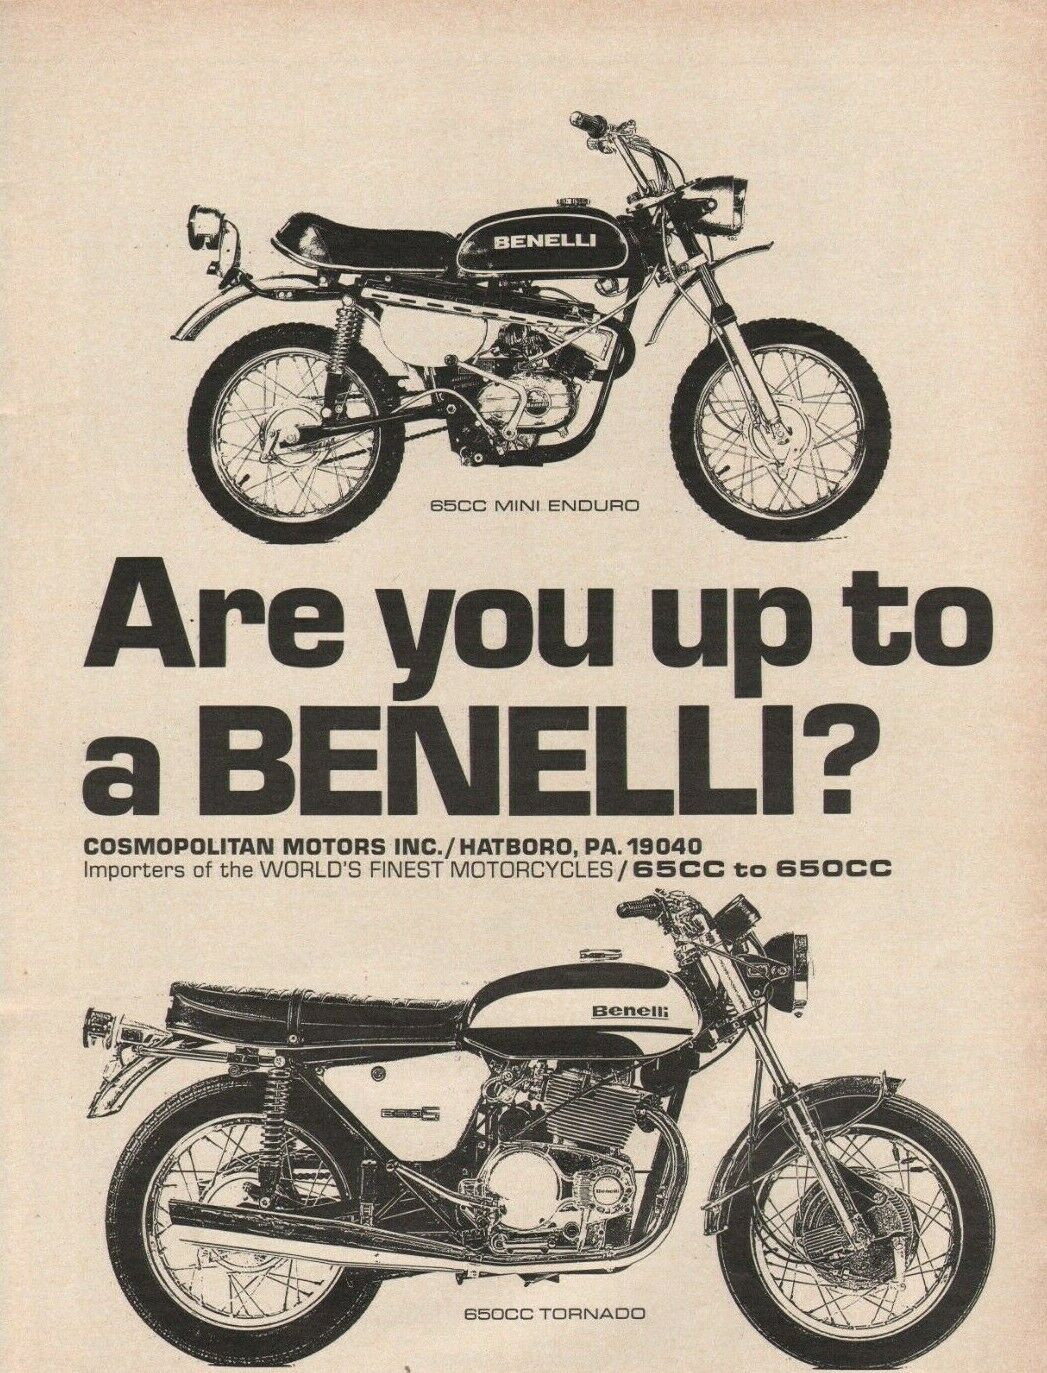 1972 Benelli 65cc Mini Enduro & 650cc Tornado - Vintage Motorcycle Ad